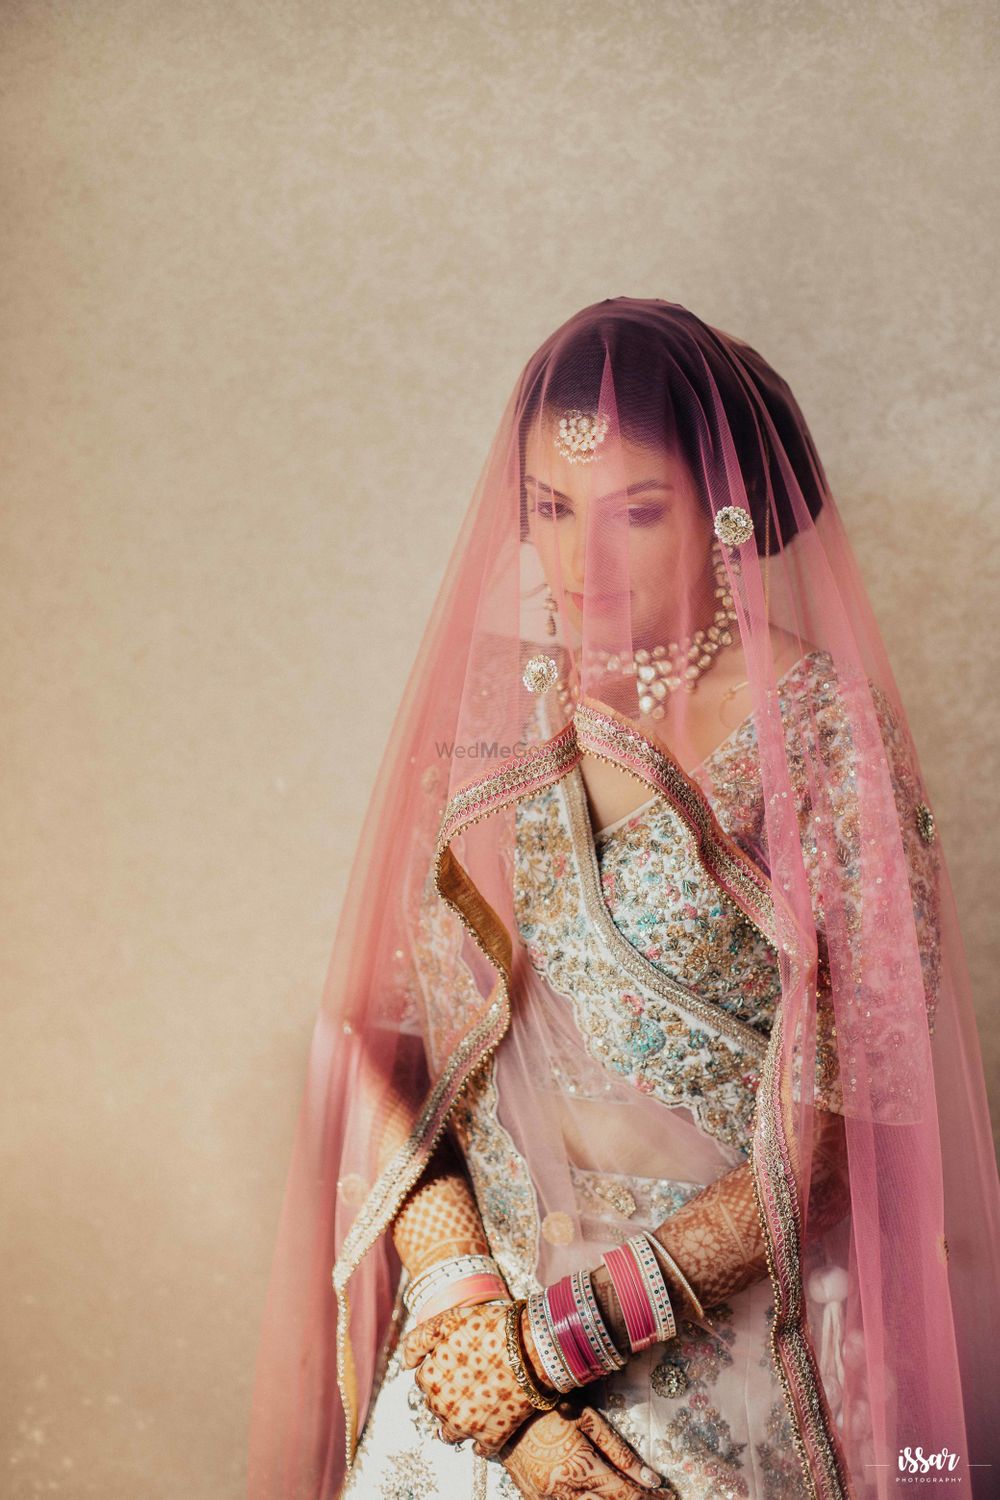 Photo of Bridal portrait with dupatta as a veil